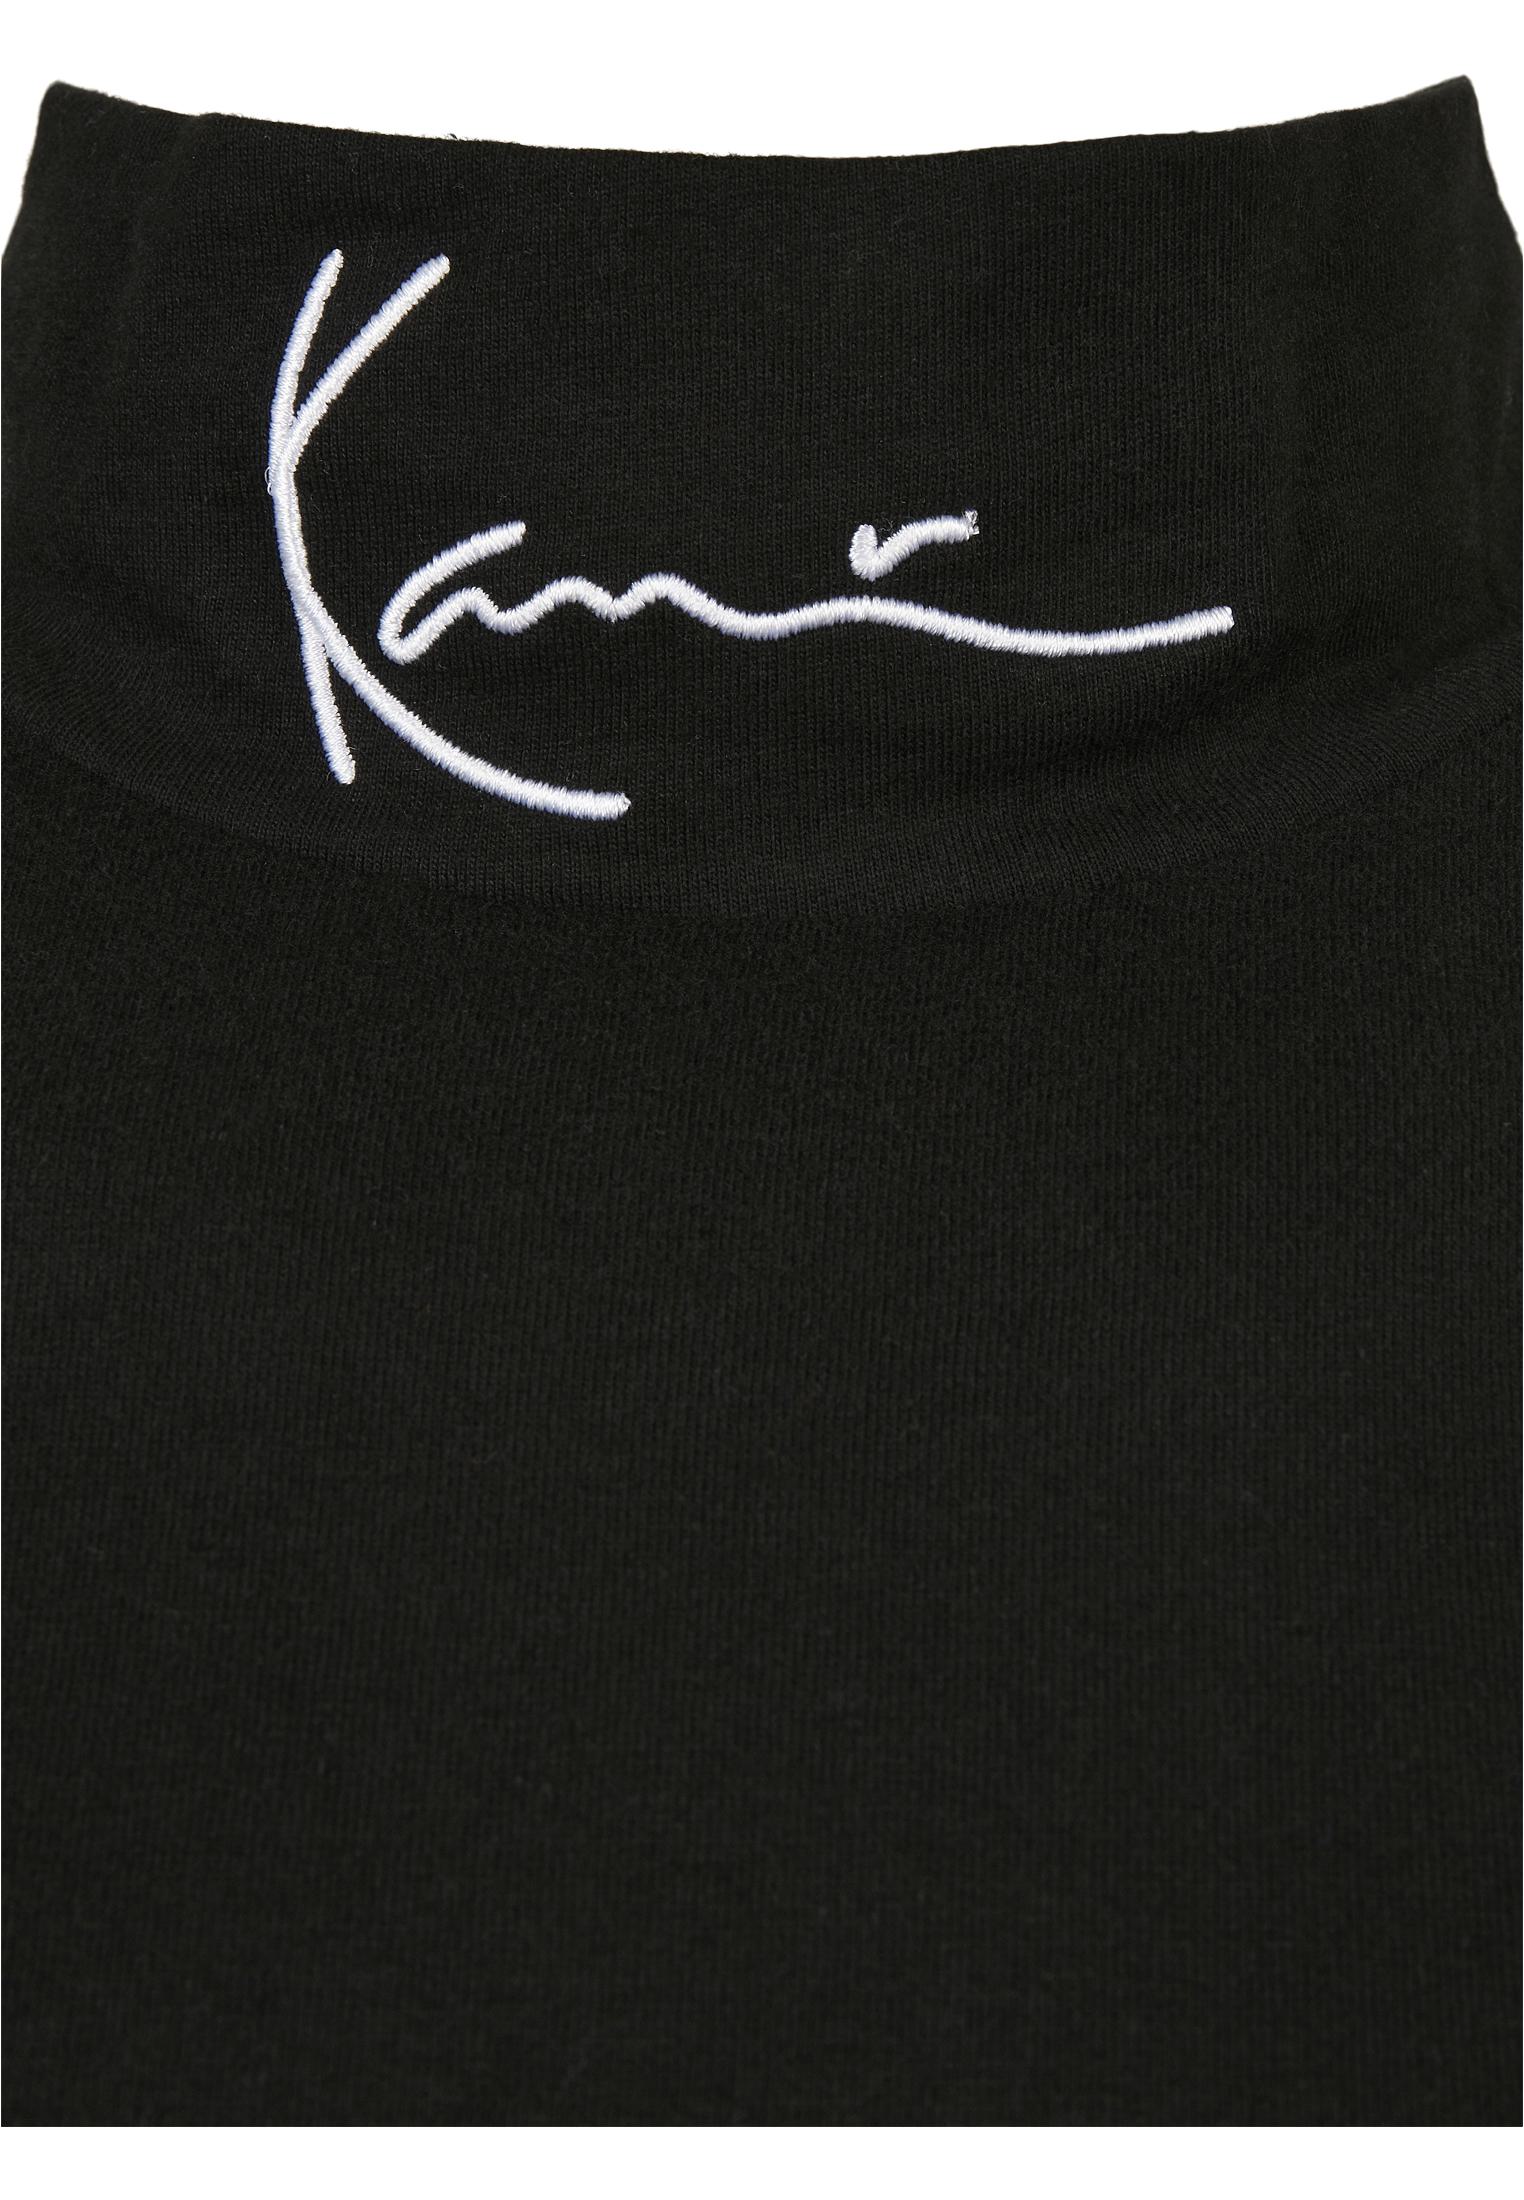 Karl Kani KU214-025-2 Small Signature Turtle Neck LS black (Farbe: black / Größe: S)